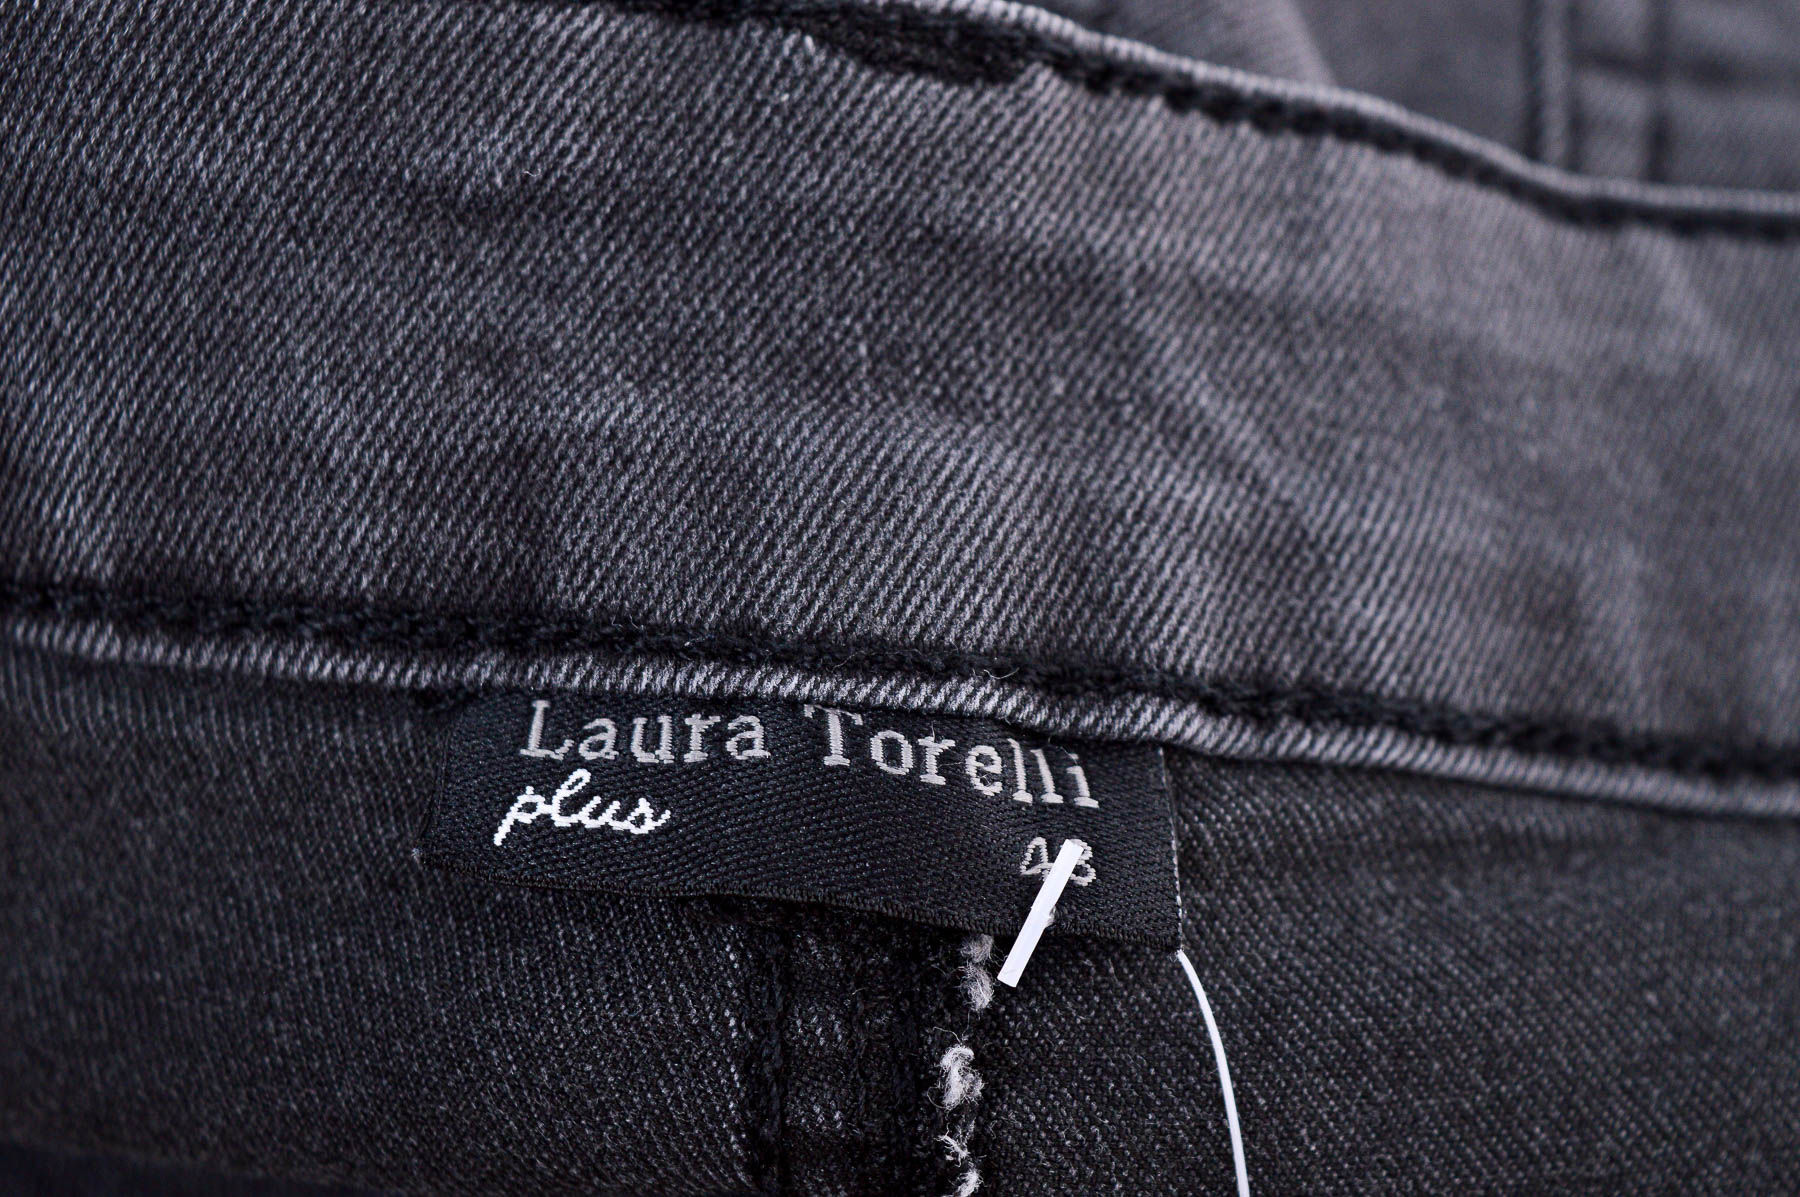 Women's jeans - Laura Torelli - 2